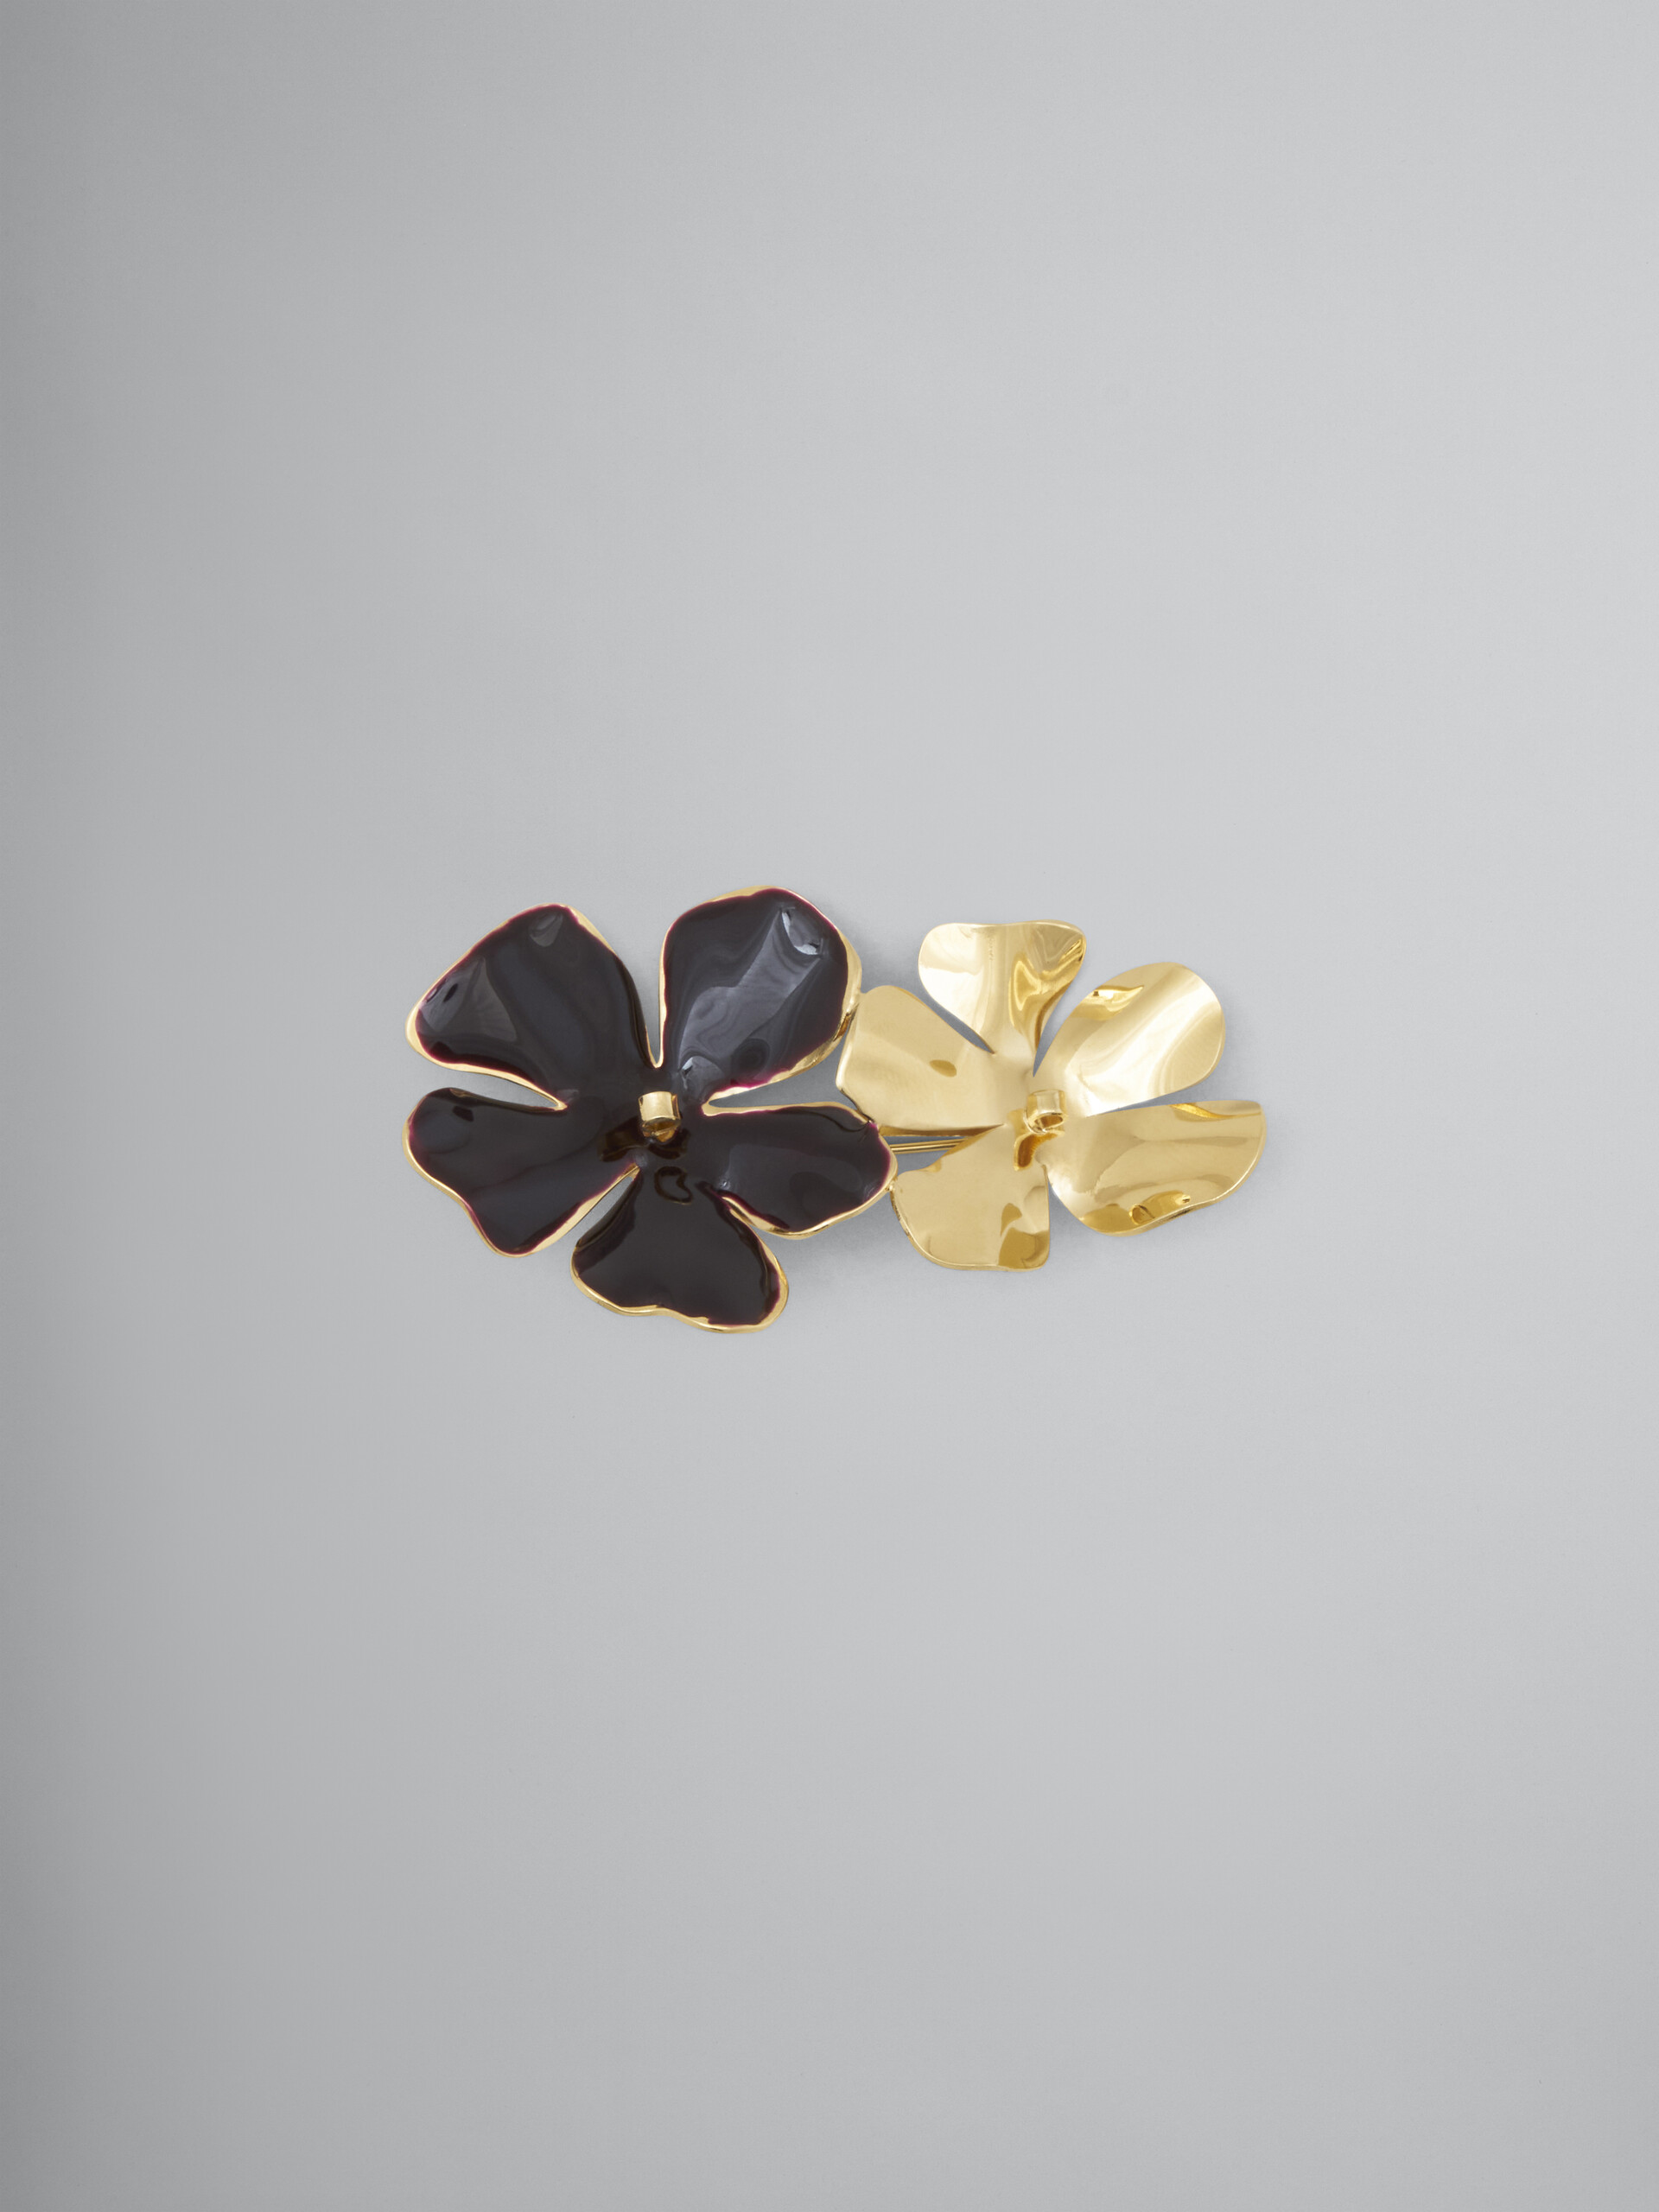 Brass FLOWER brooch in the shape of a flower with enamel petals - Broach - Image 1